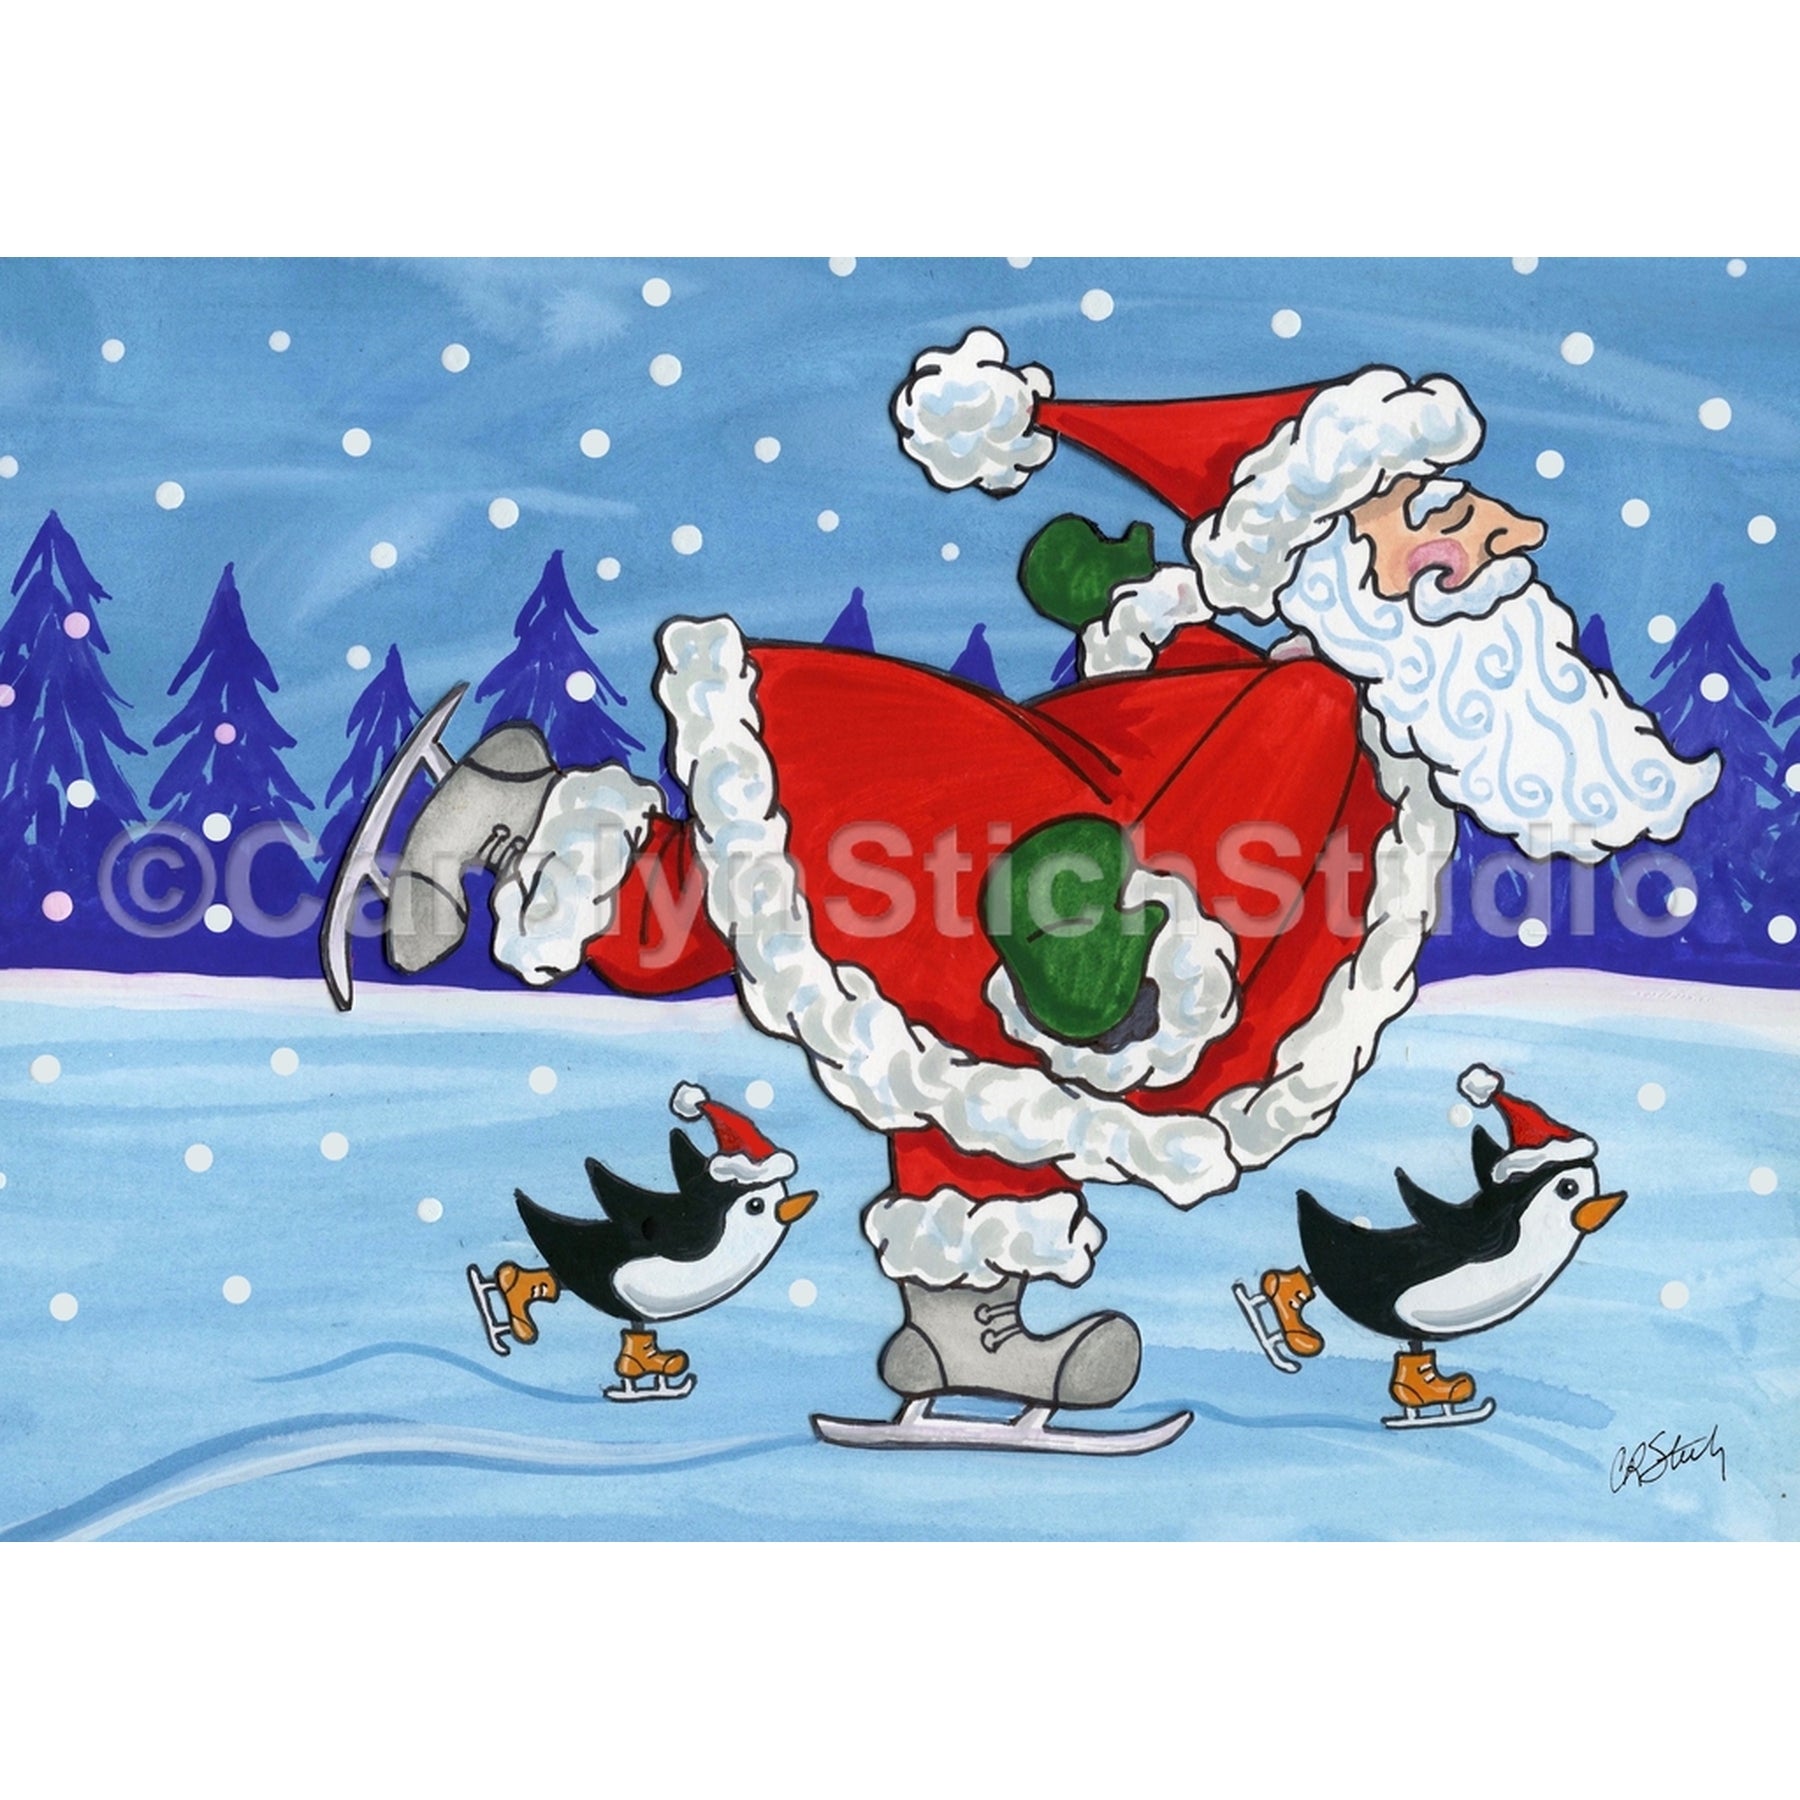 Santa Skating with Friends, rug hooking pattern